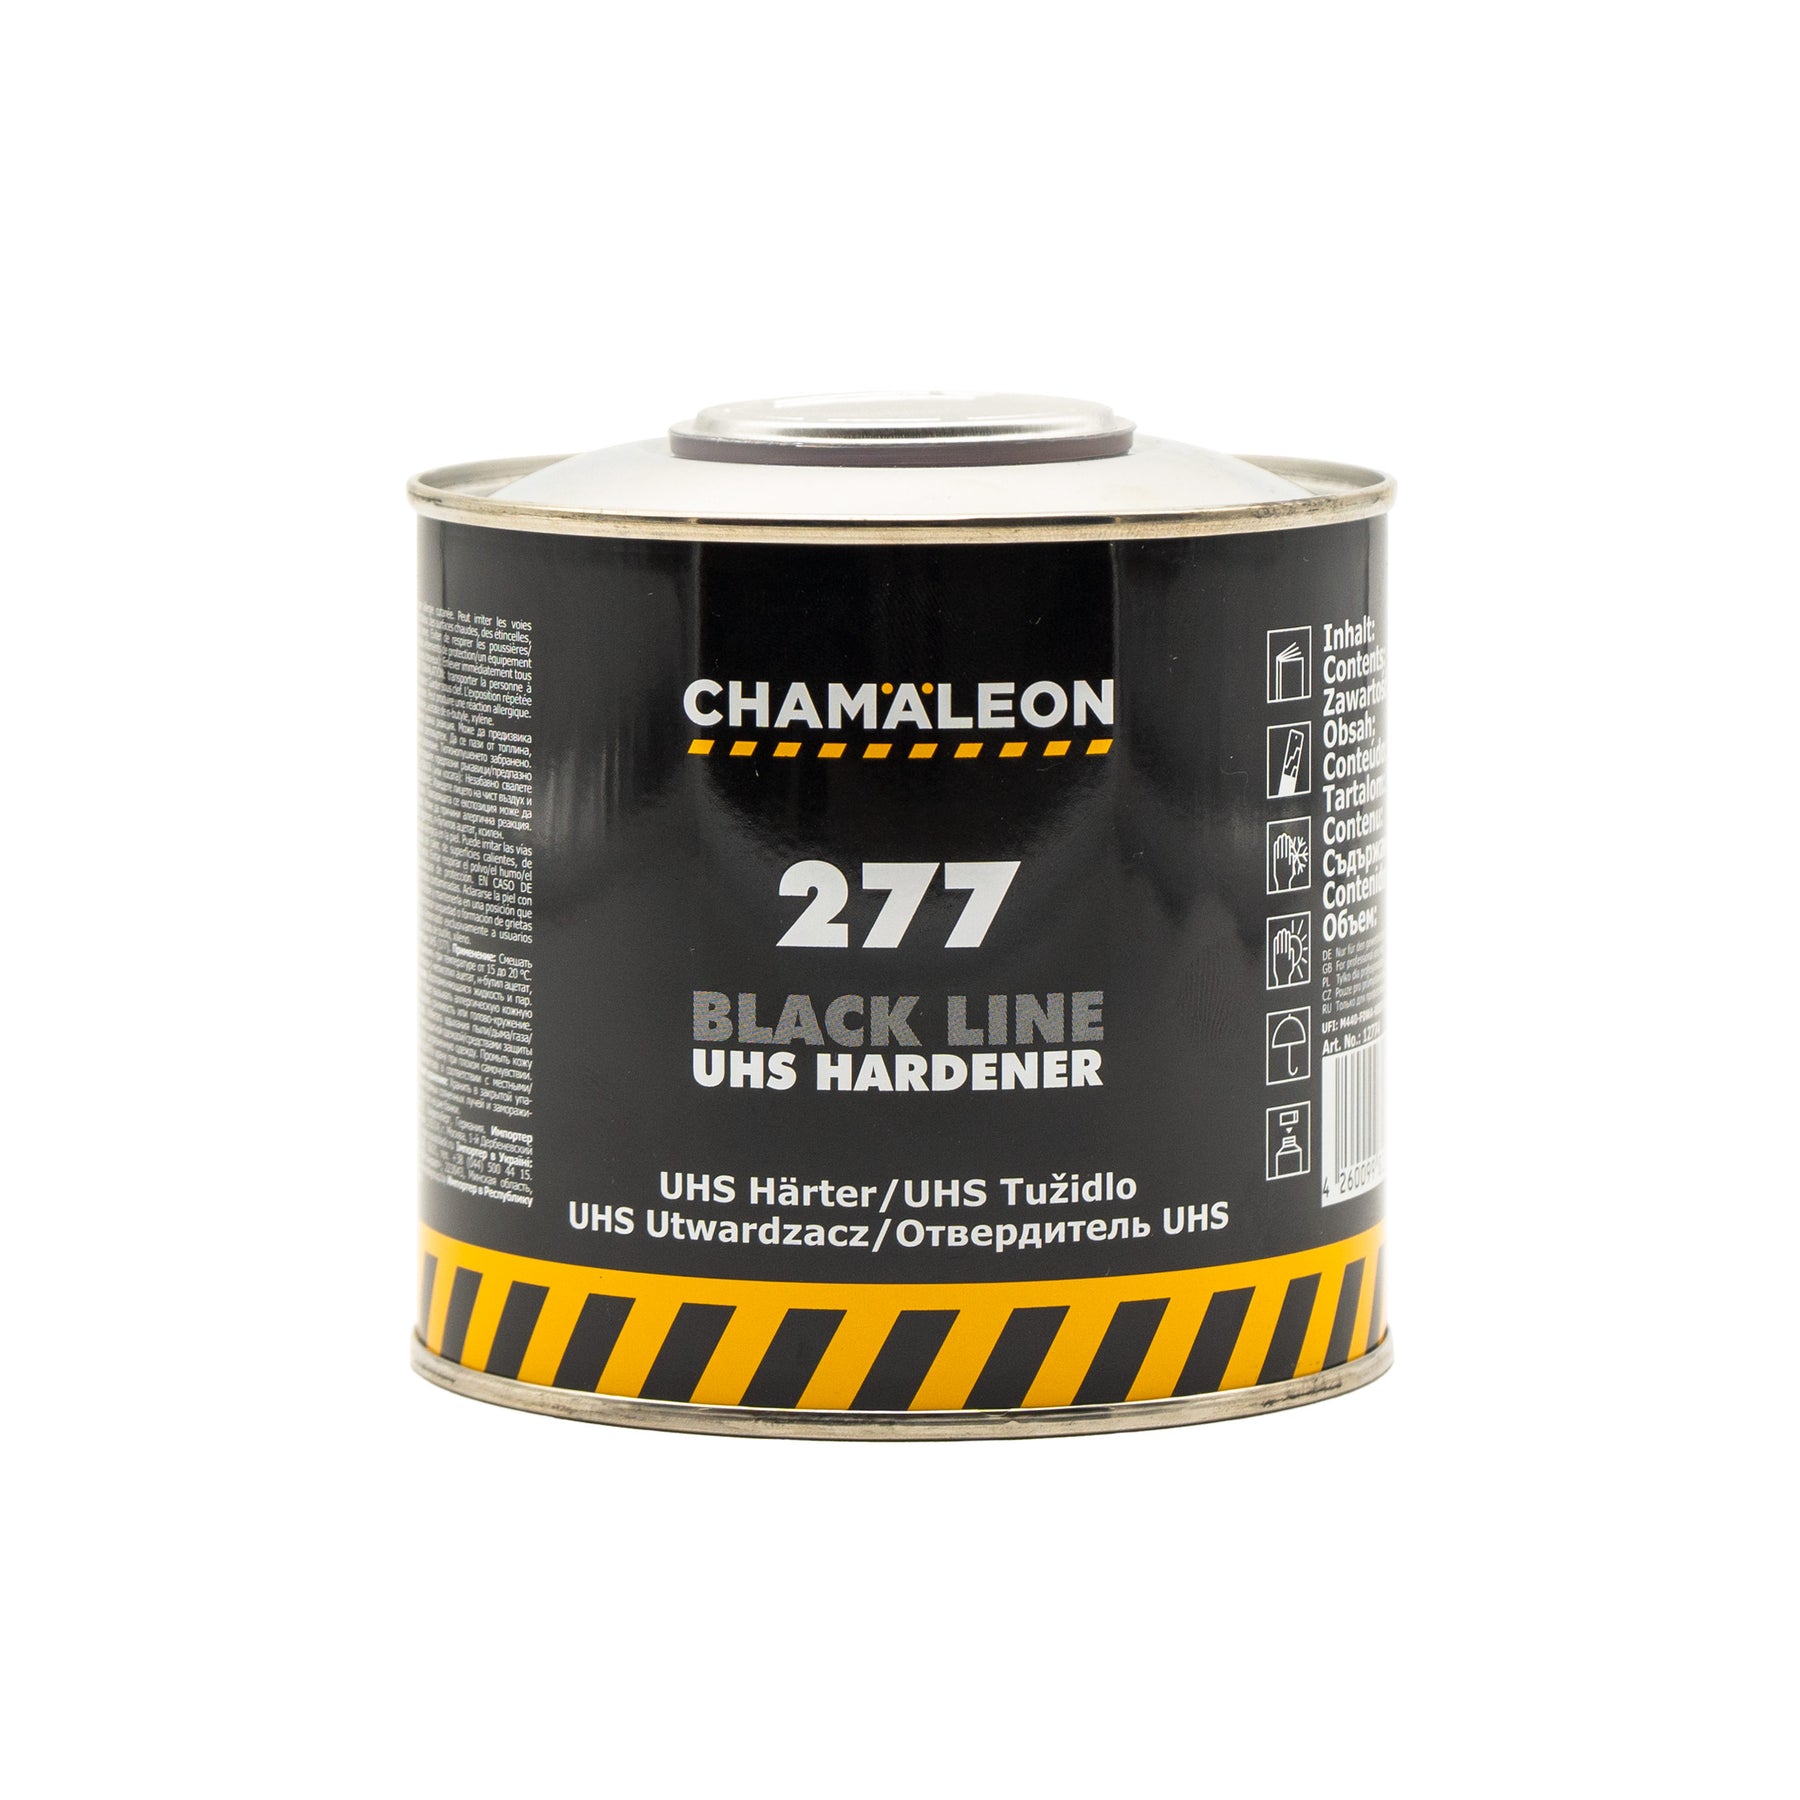 Chamaleon UHS Hardener 277